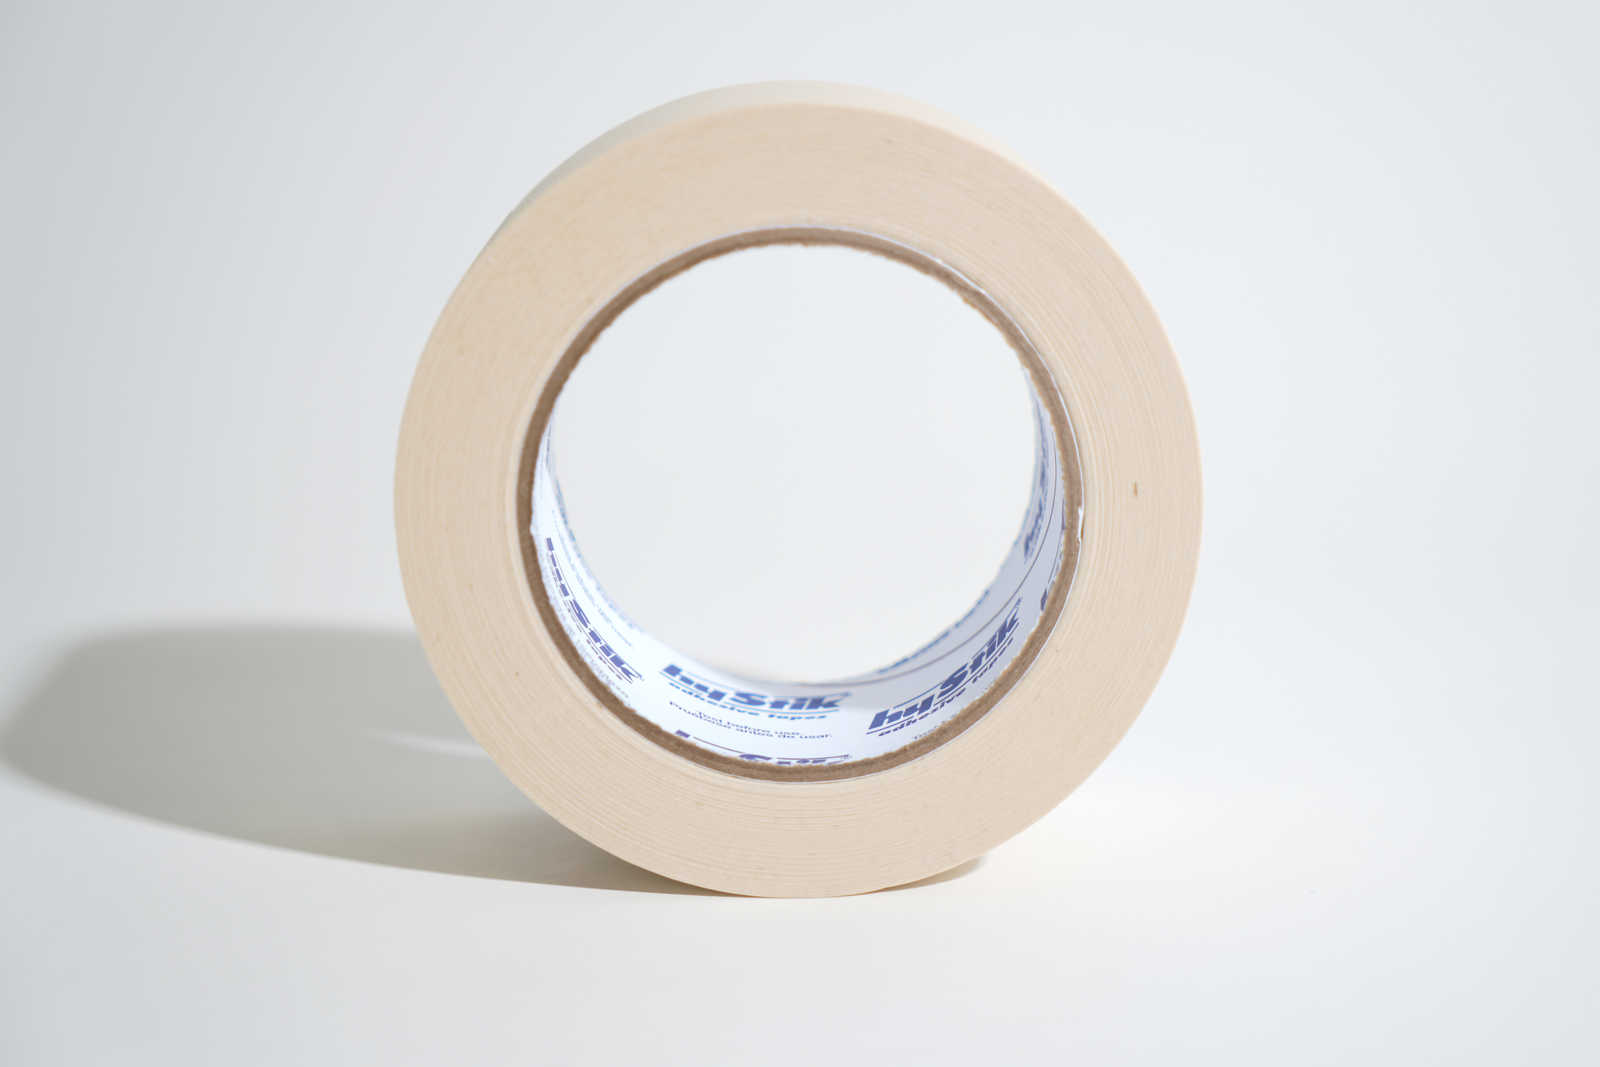             Crepe tape 50mm x 50m in crème
        